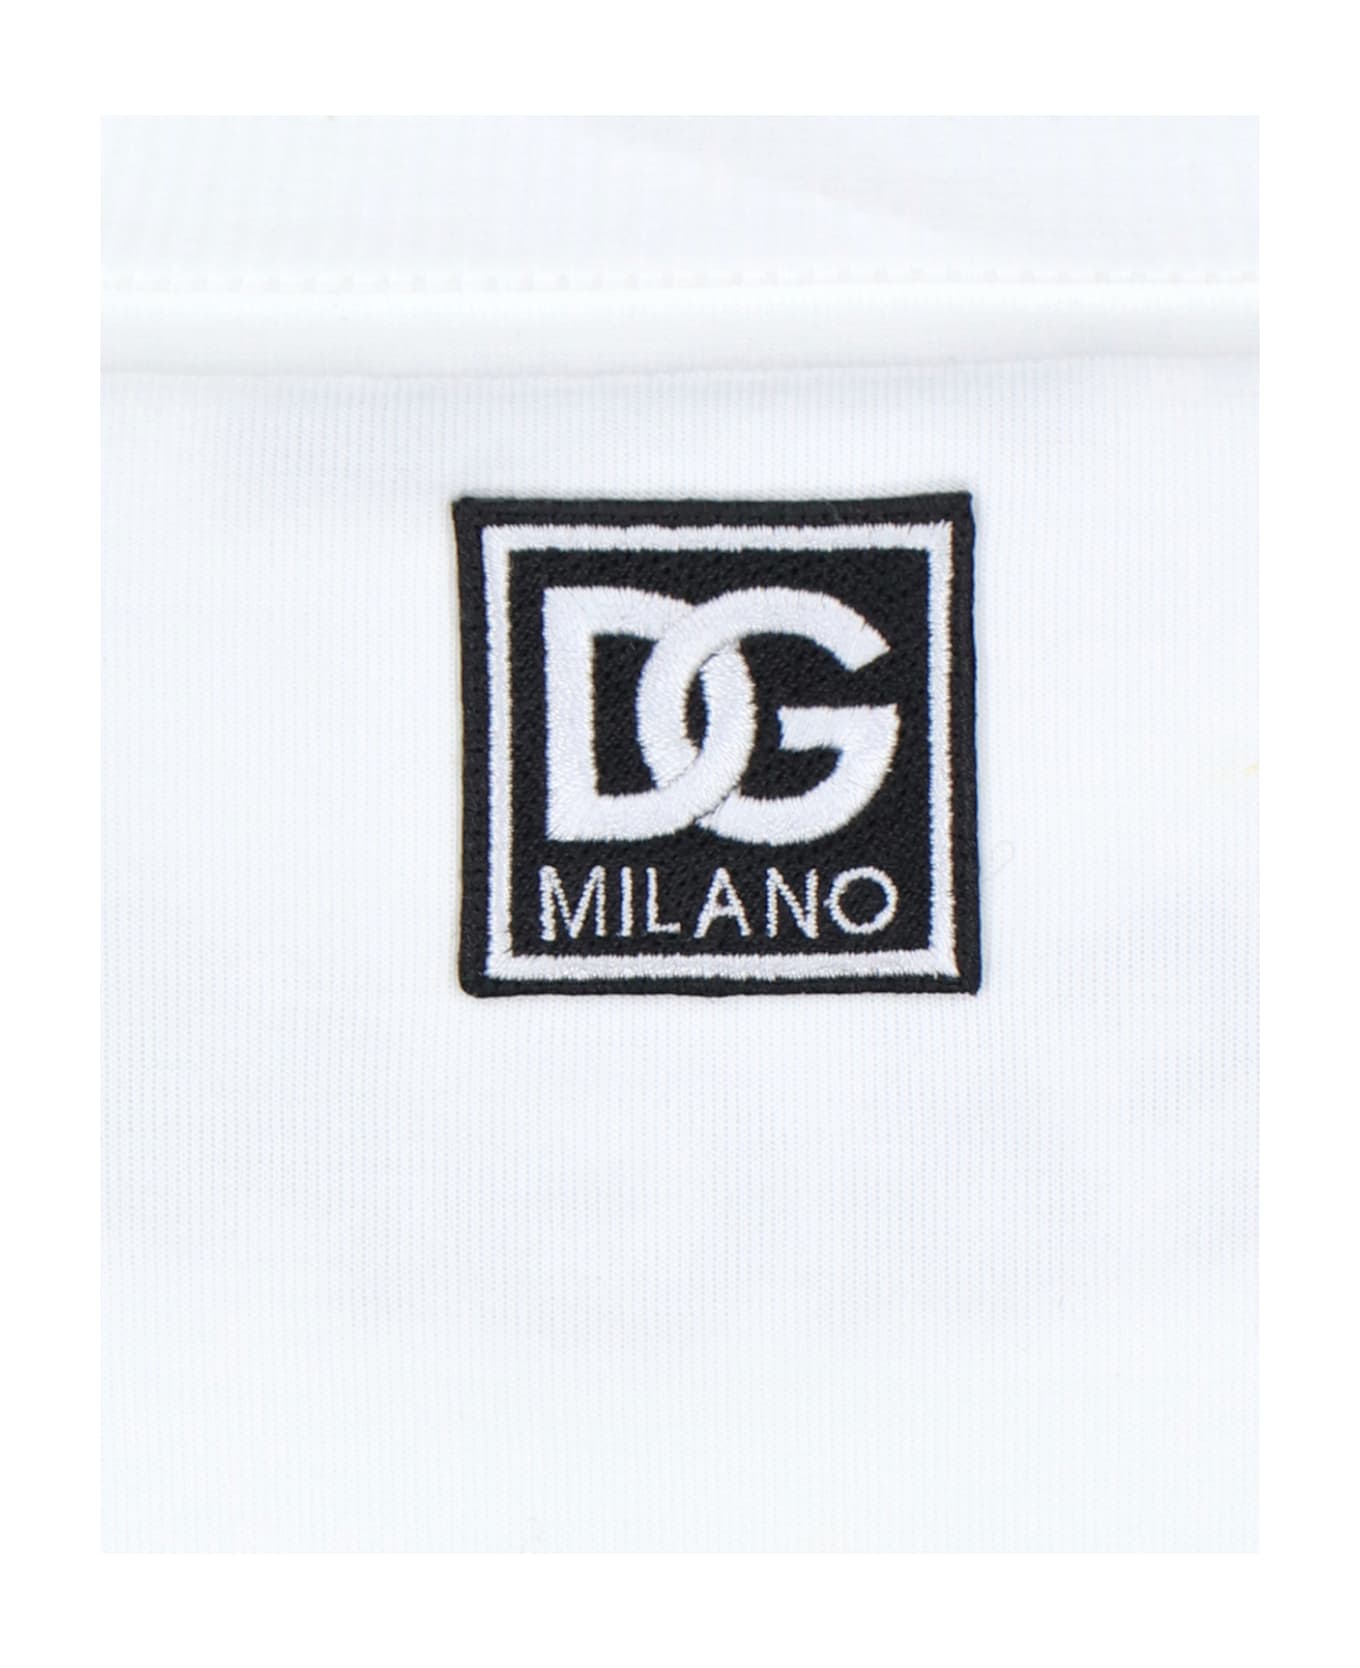 Dolce & Gabbana Sweatshirt With Logo - White